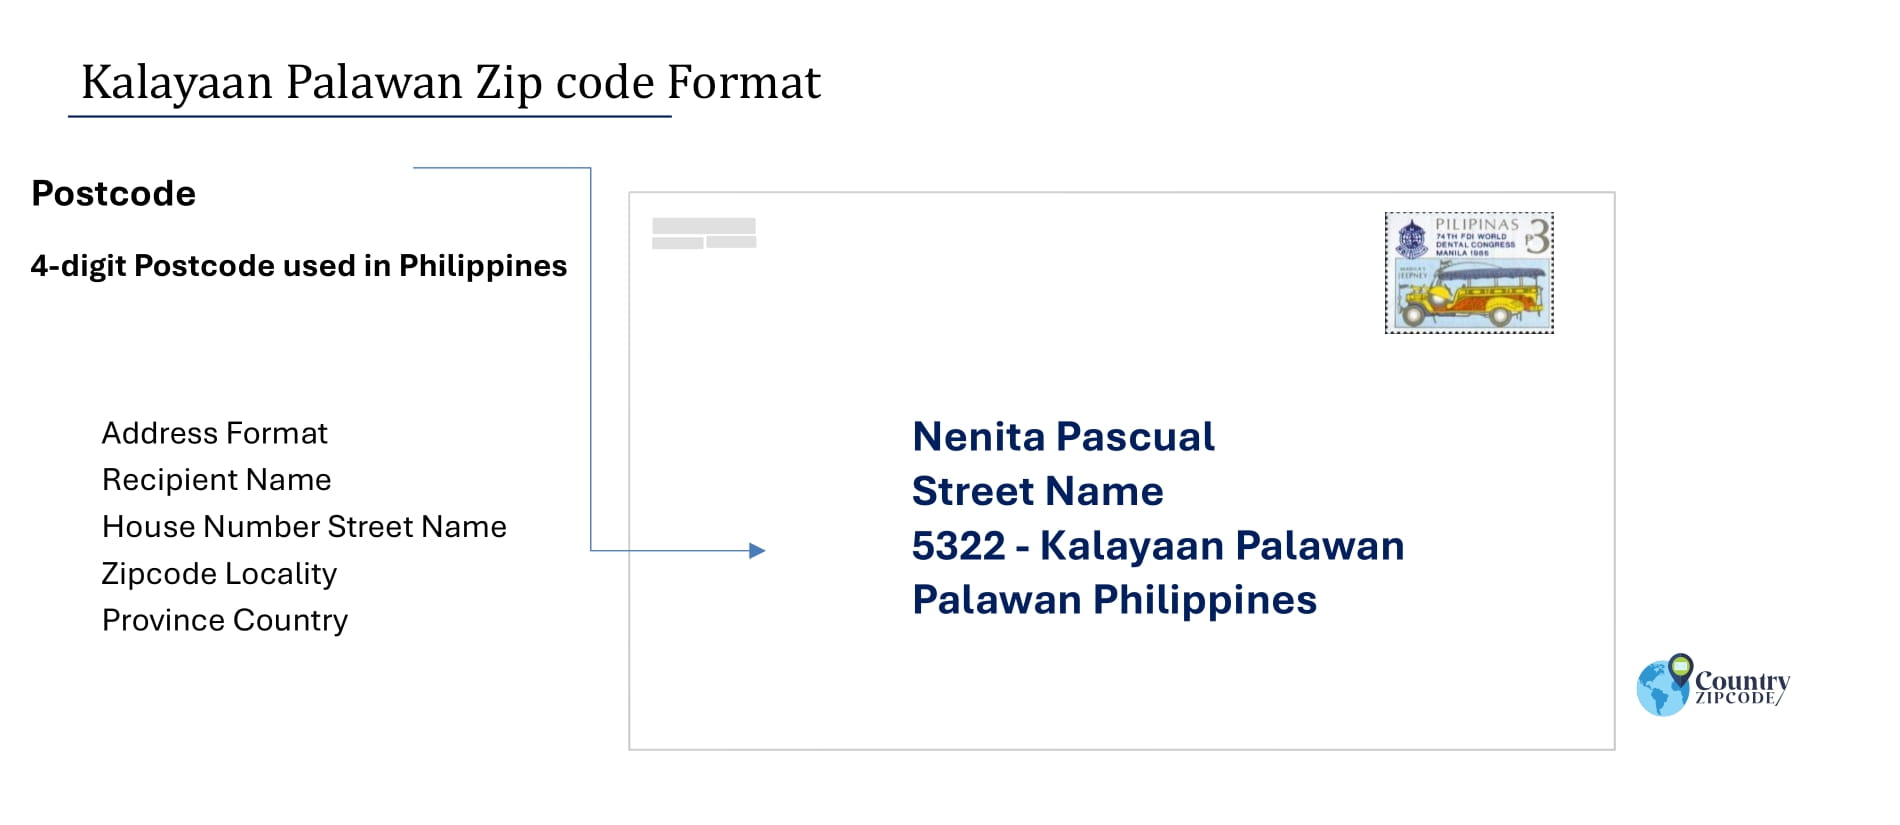 example of Kalayaan Palawan Philippines zip code and address format